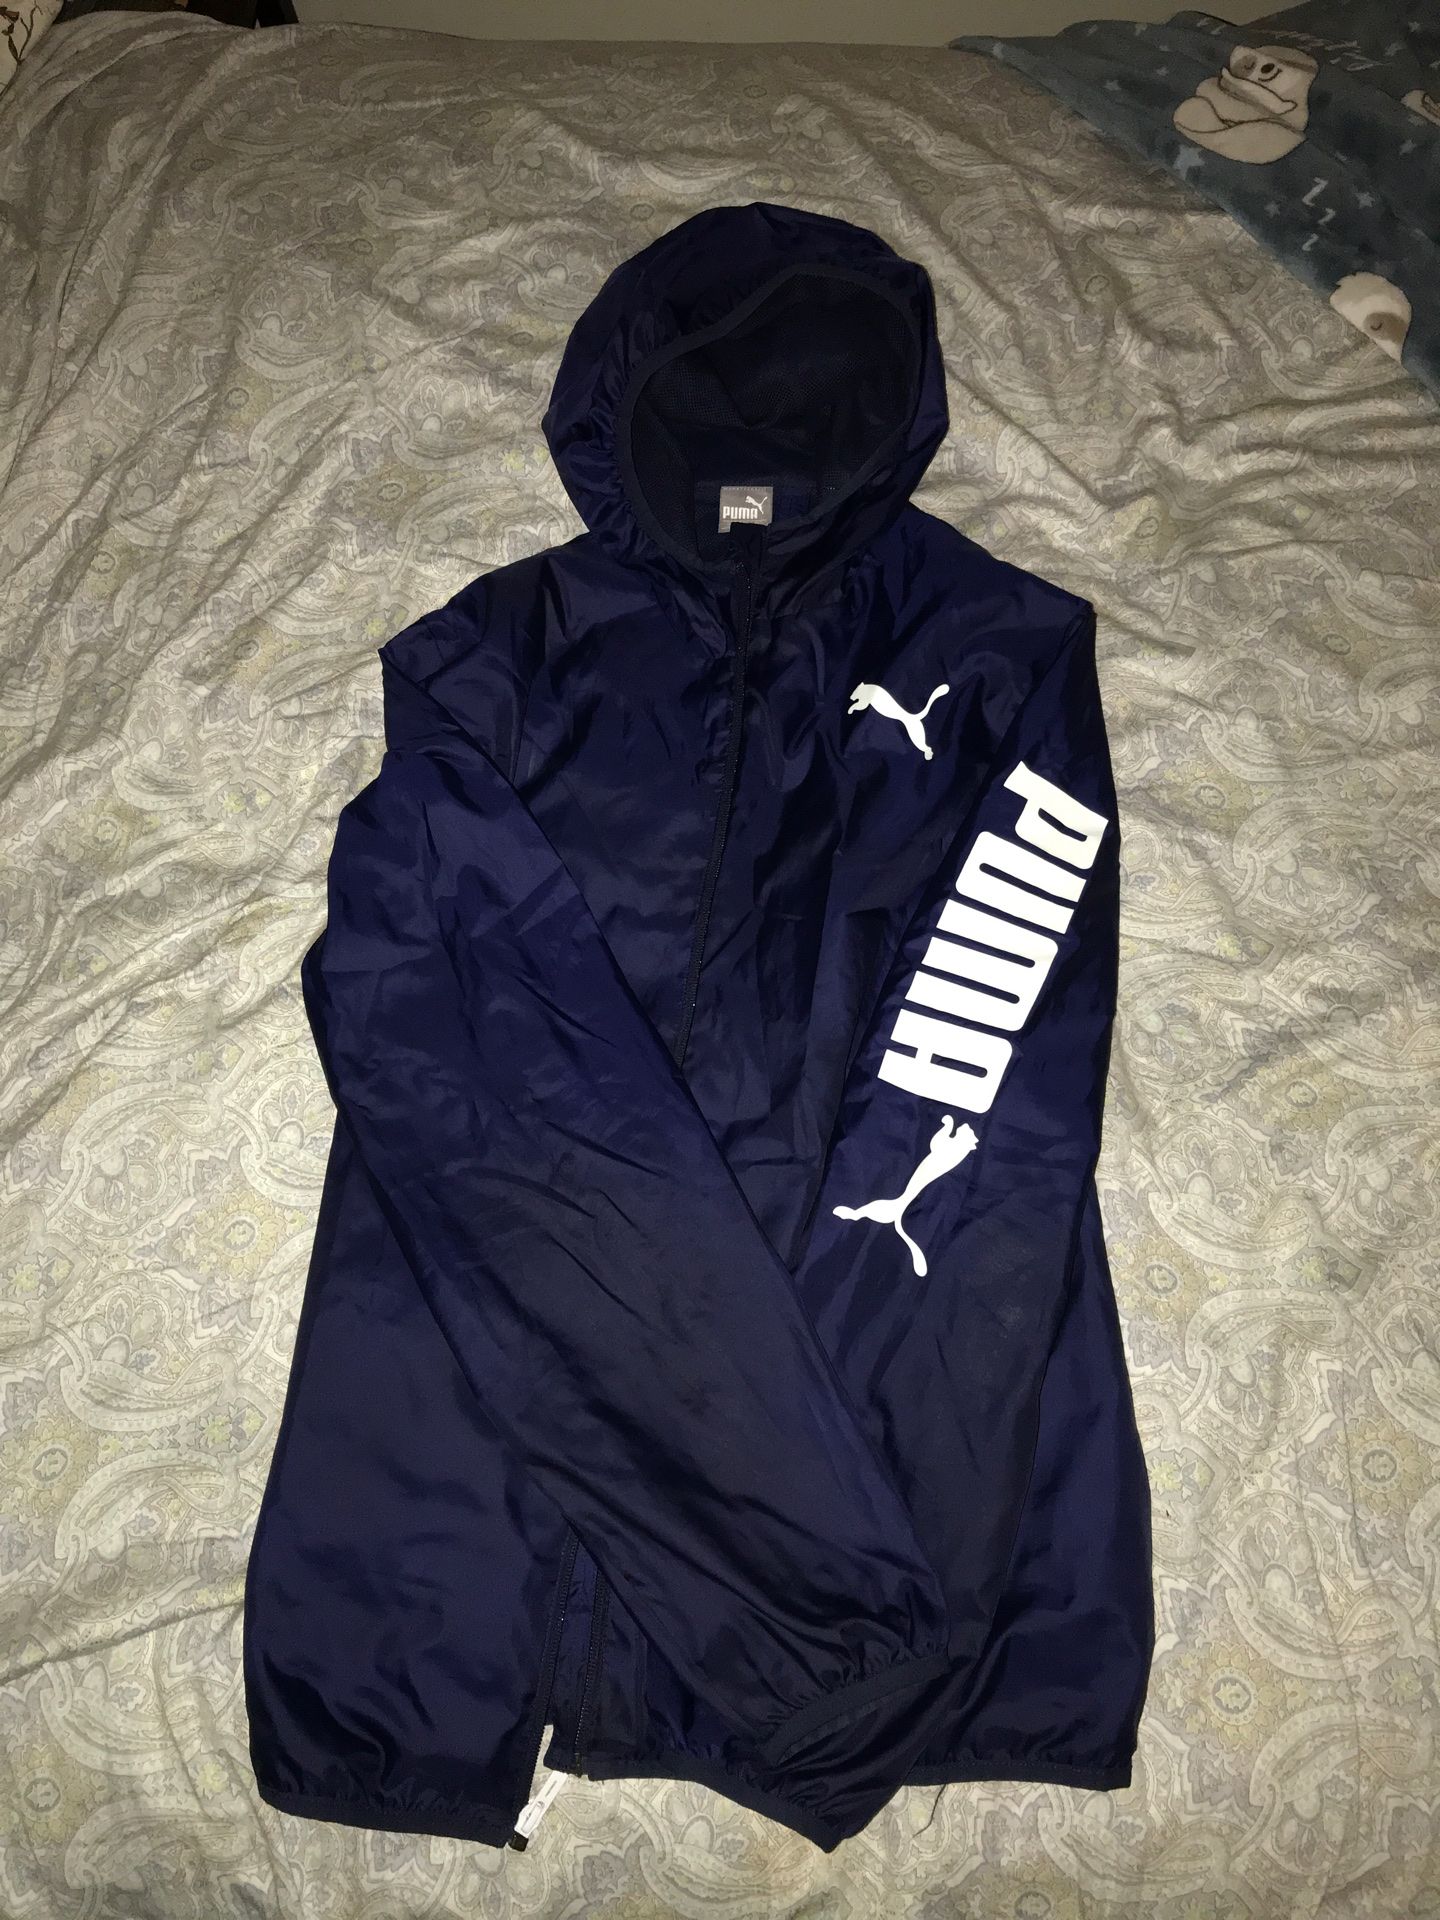 Puma rain jacket